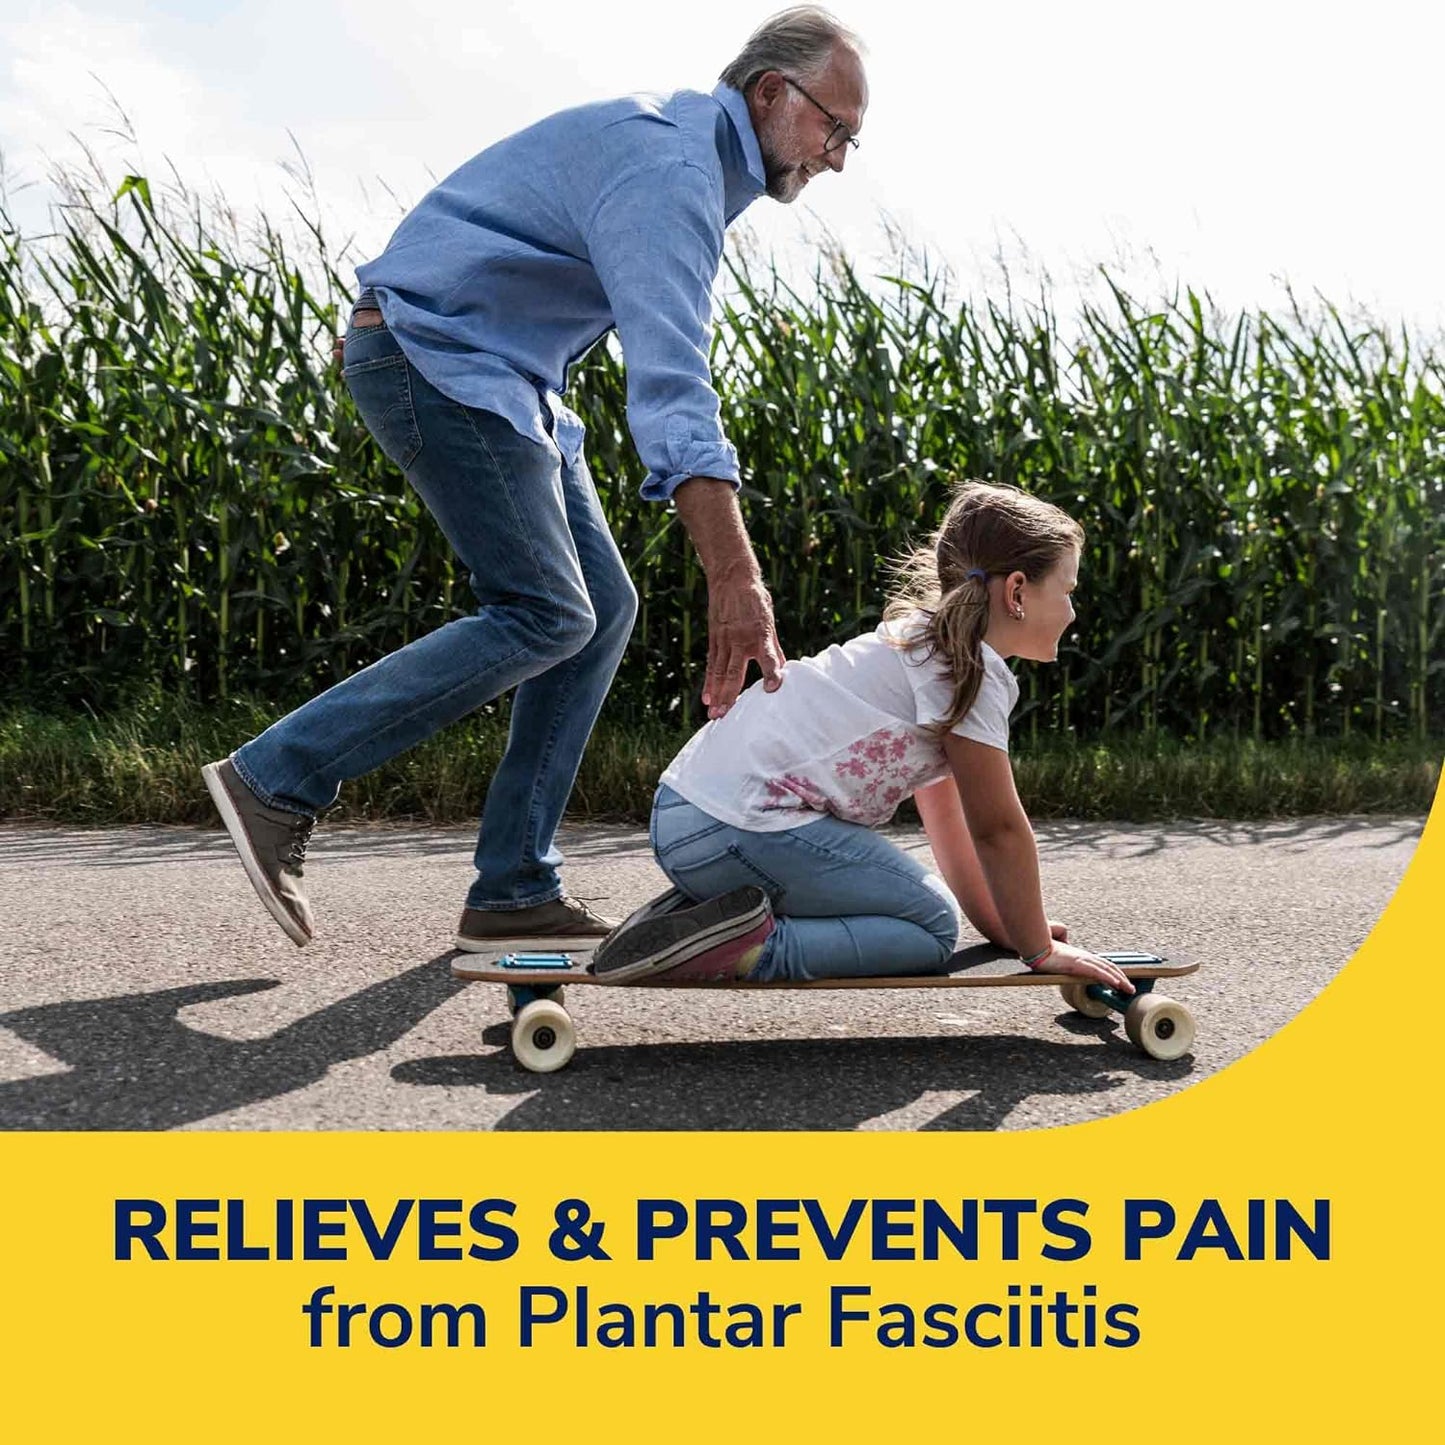 Dr. Scholl’s Plantar Fasciitis Pain Relief Orthotic Insoles Men Size 8-13